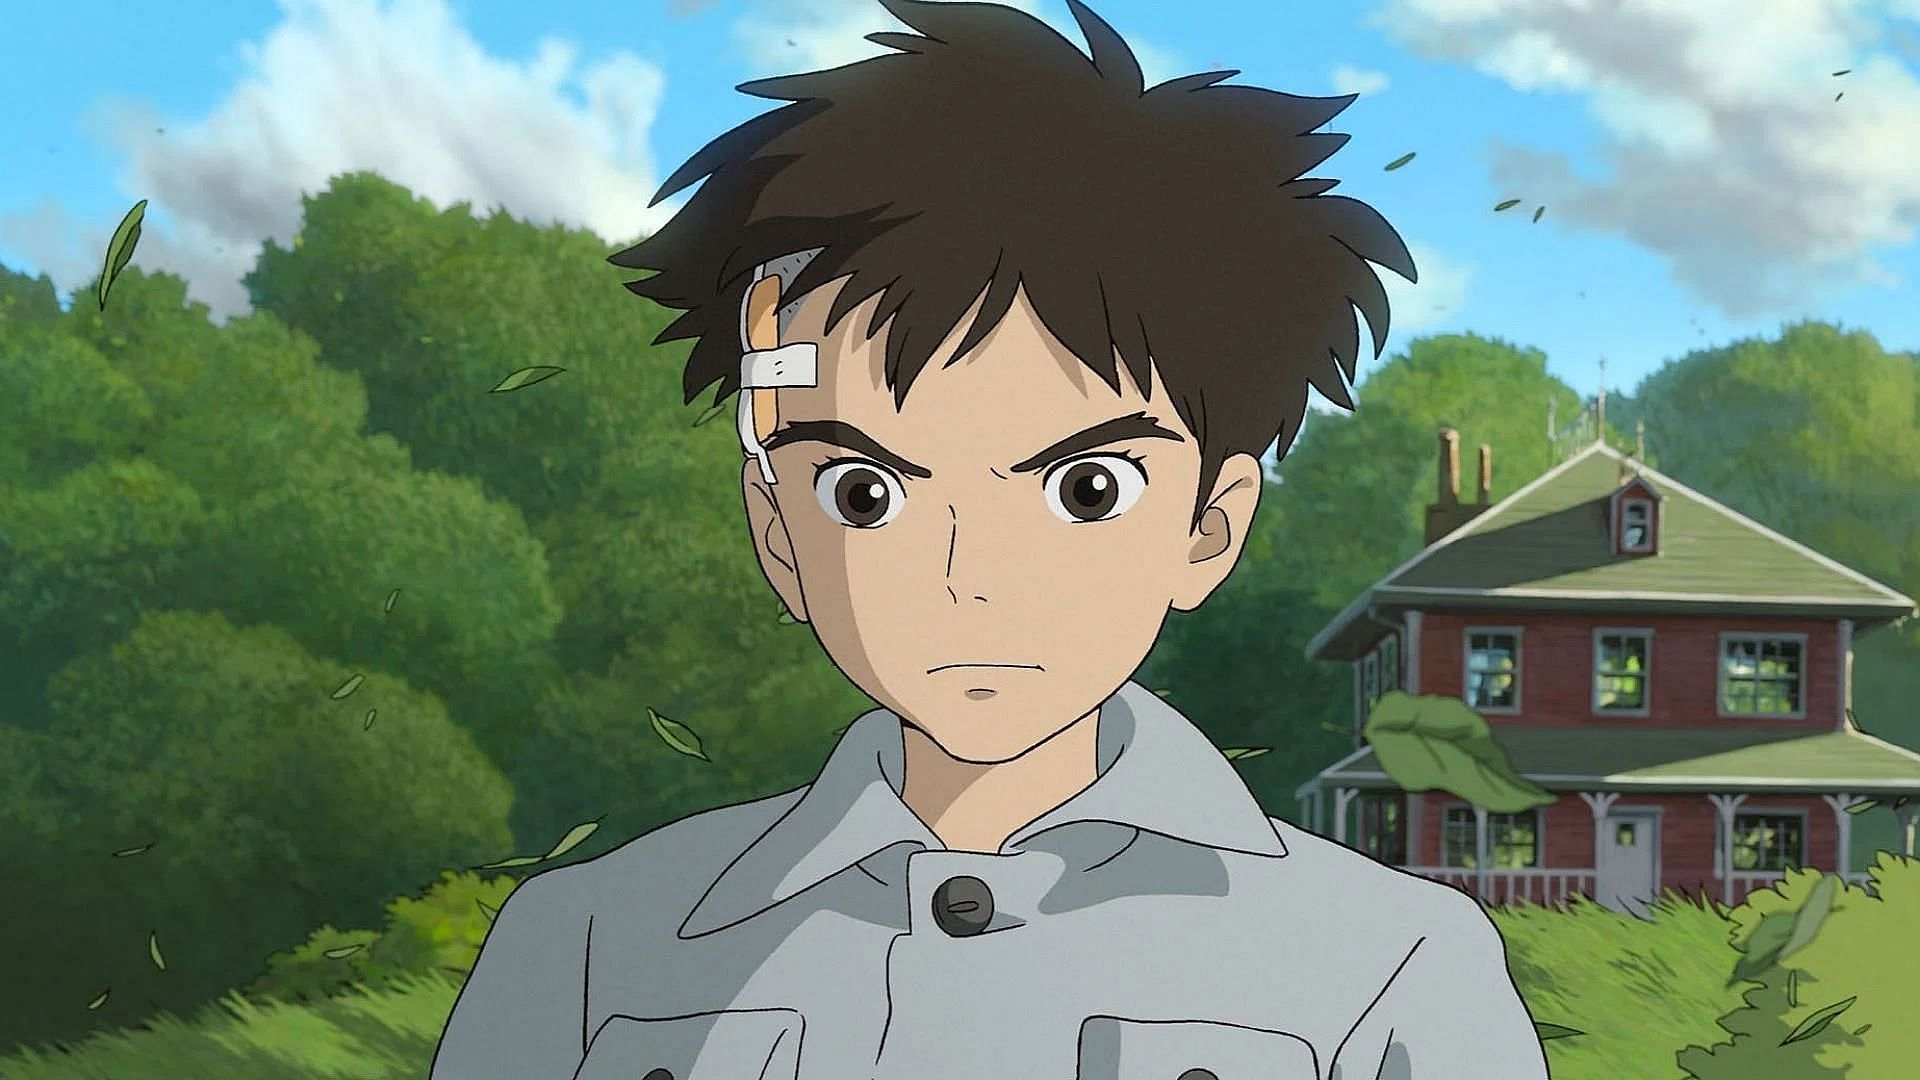 Mahito, as seen in the movie (Image via Studio Ghibli)